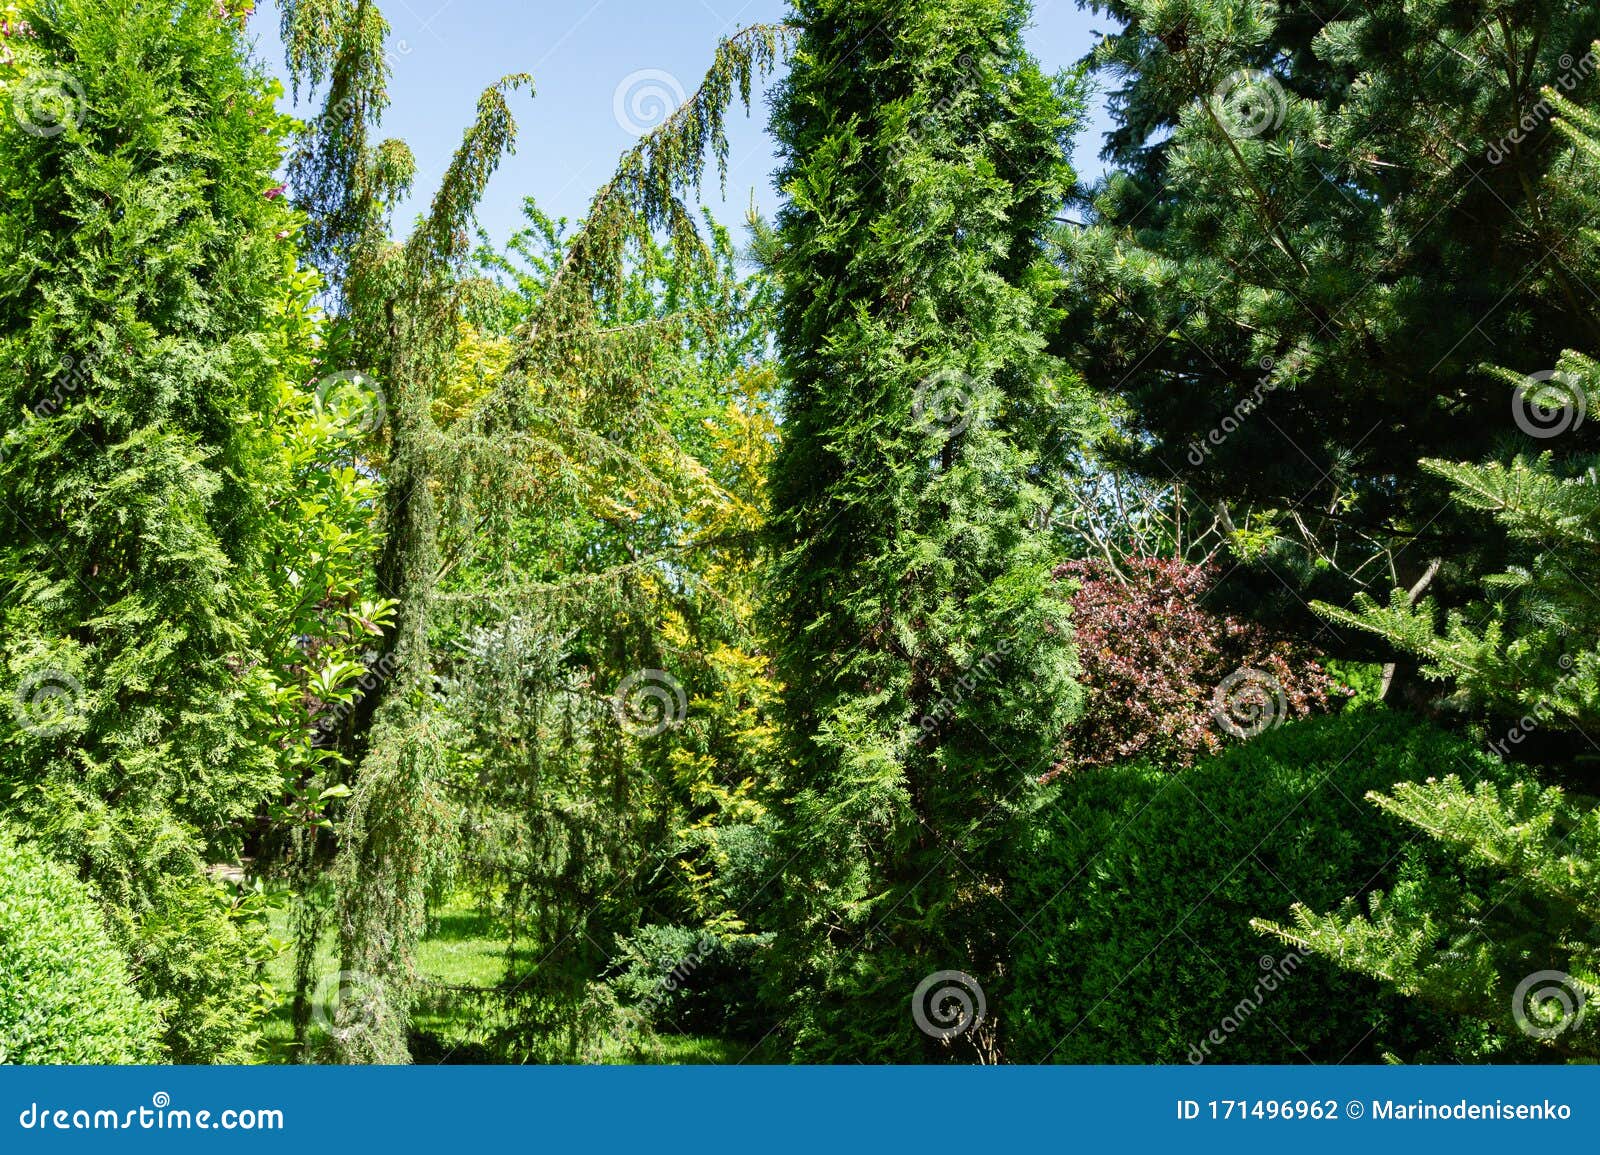 original multicolor beautiful landscaped garden with evergreens. thuja occidentalis columna with juniperus communis horstmann